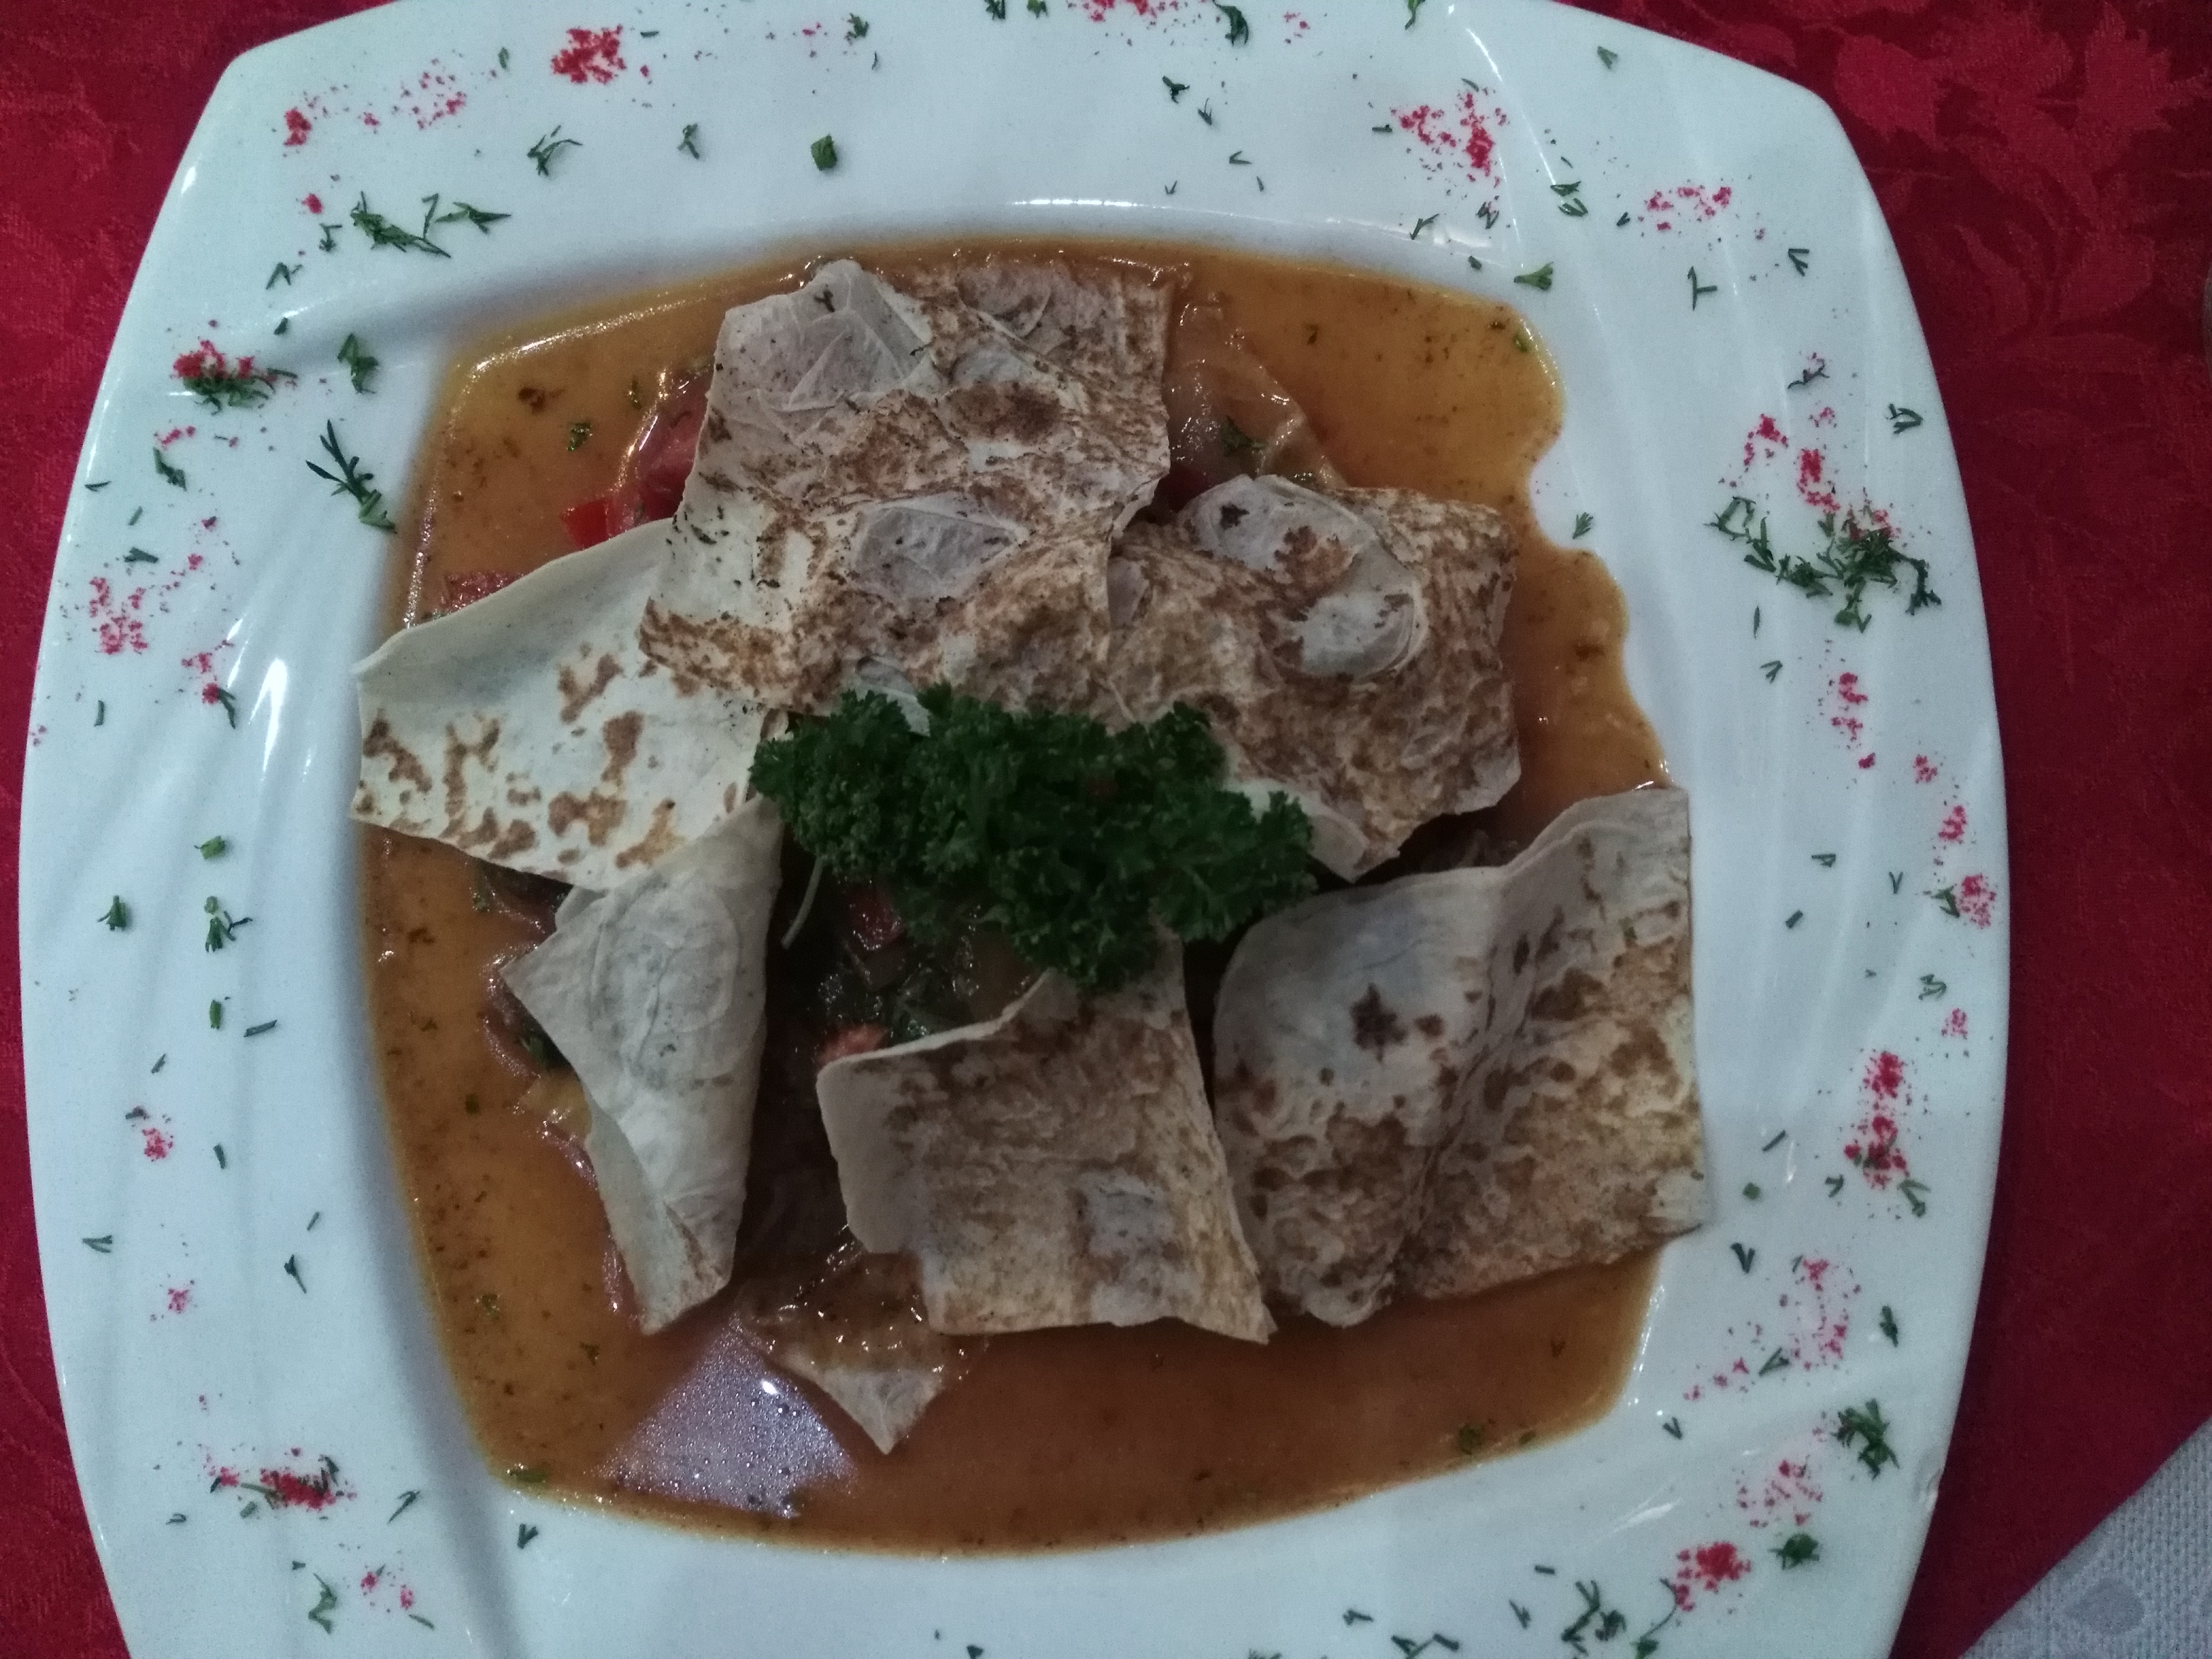 Turkish lamb dish (forgetting the name).